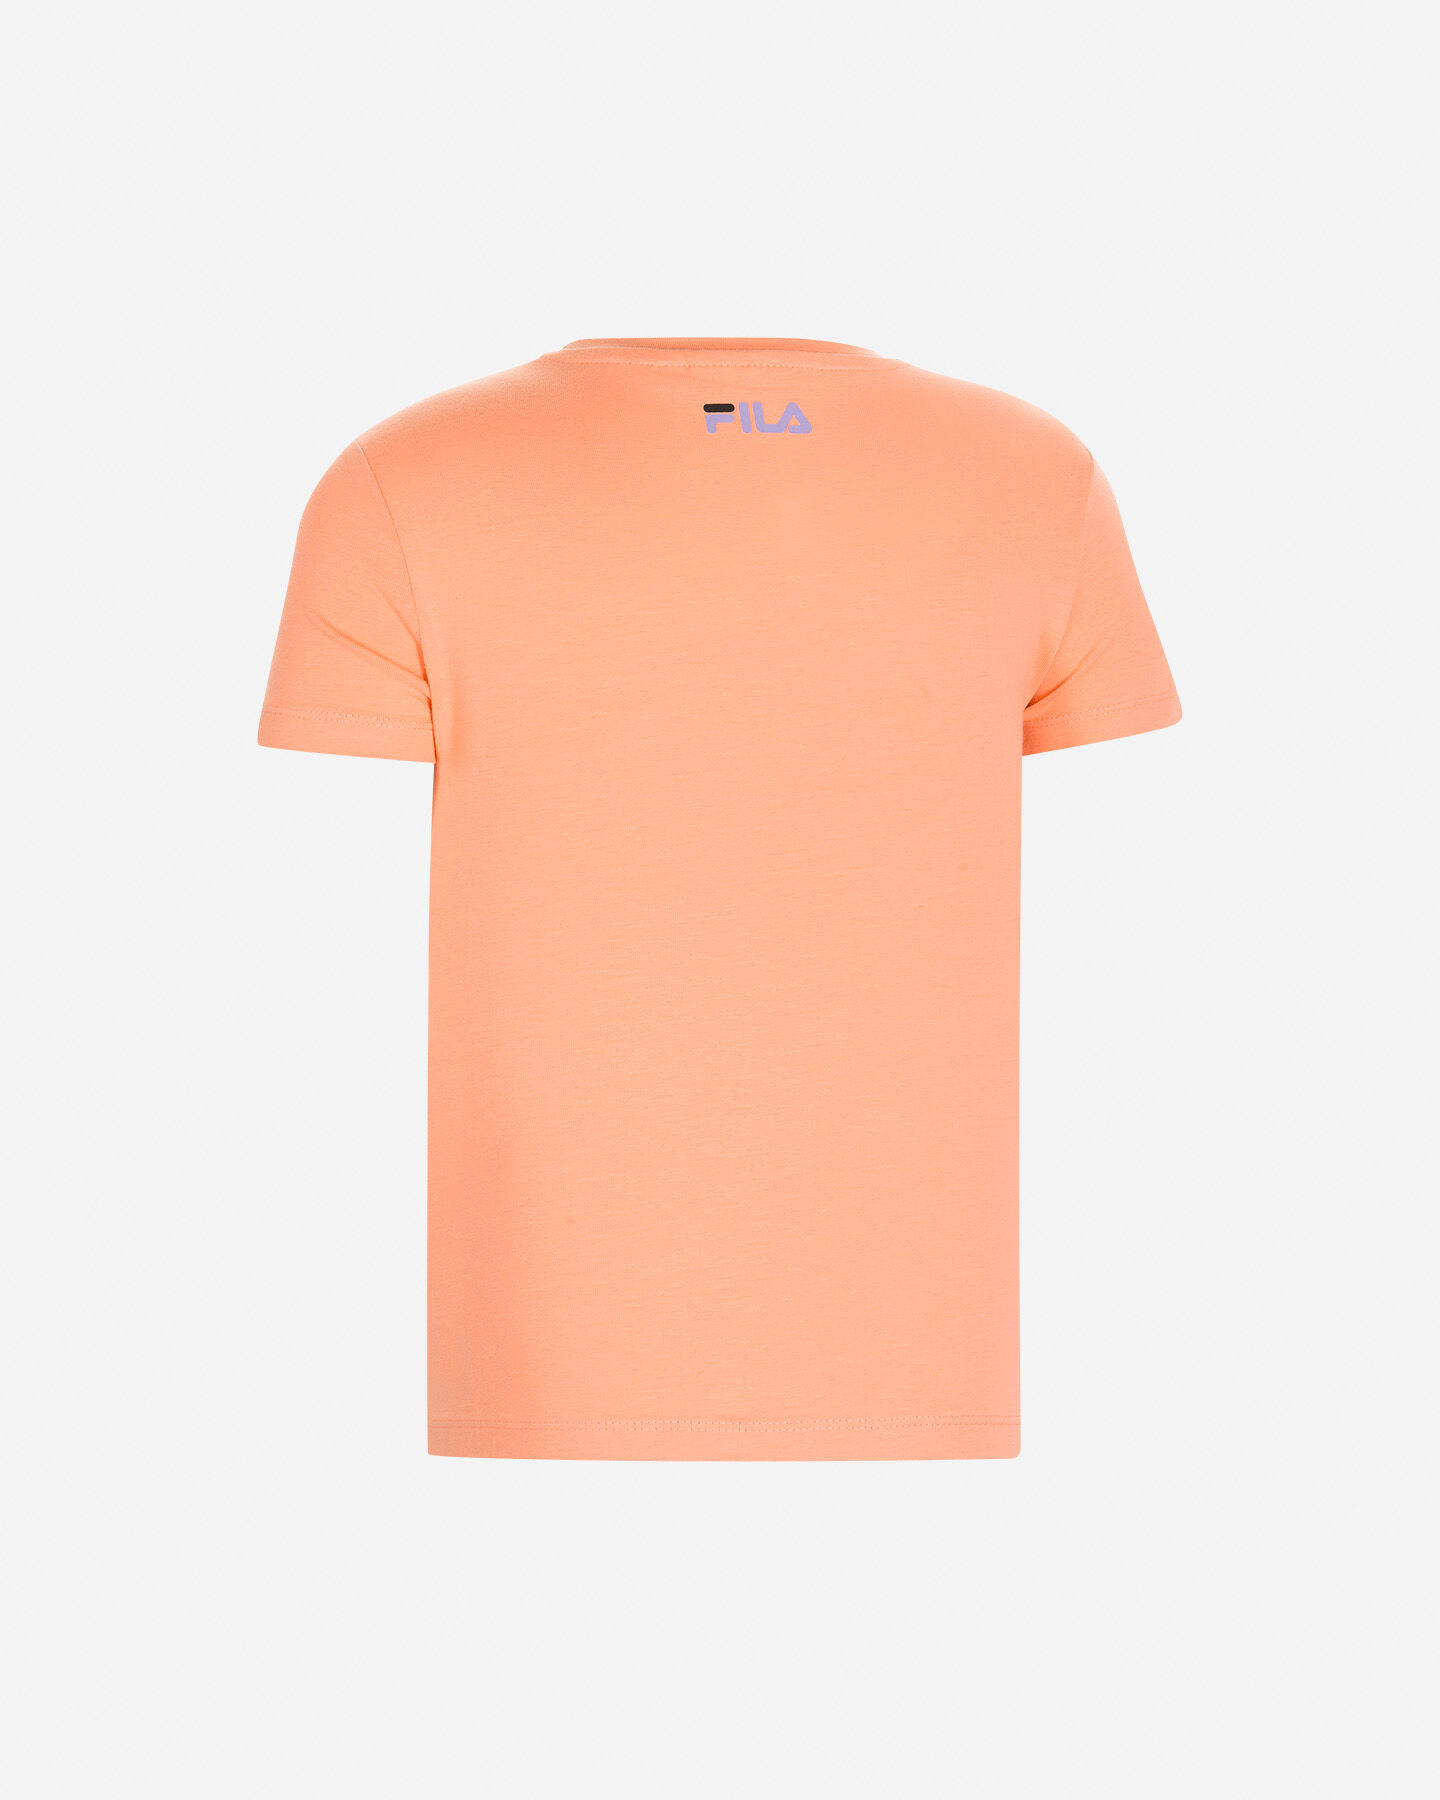  T-Shirt FILA GRAPHICS LOGO LINEA JR S4100807|343|6A scatto 1